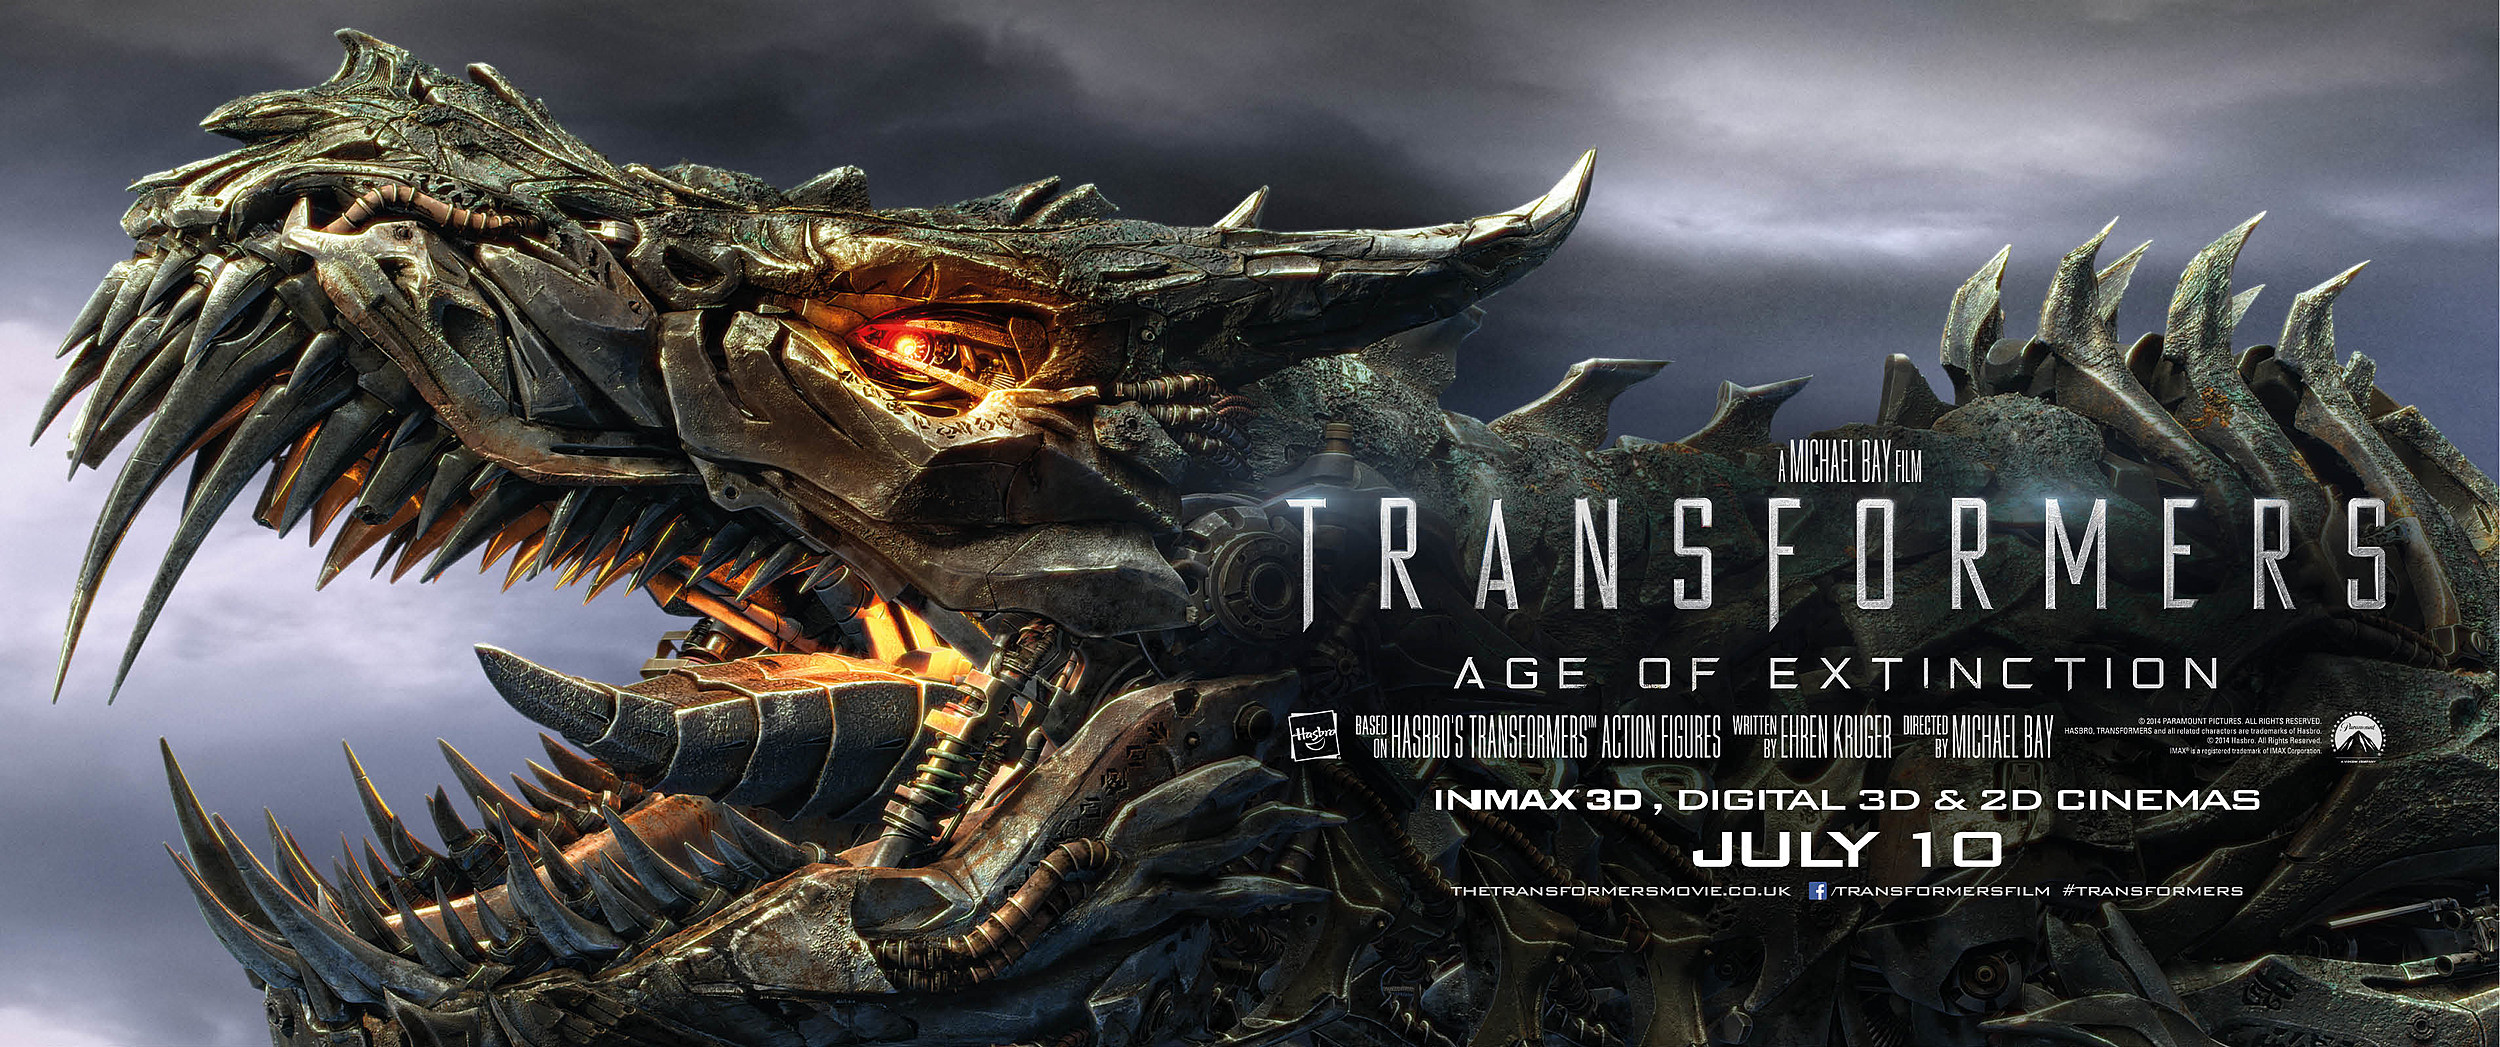 movies-transformers-age-of-extinction-poster-grimlock.jpg